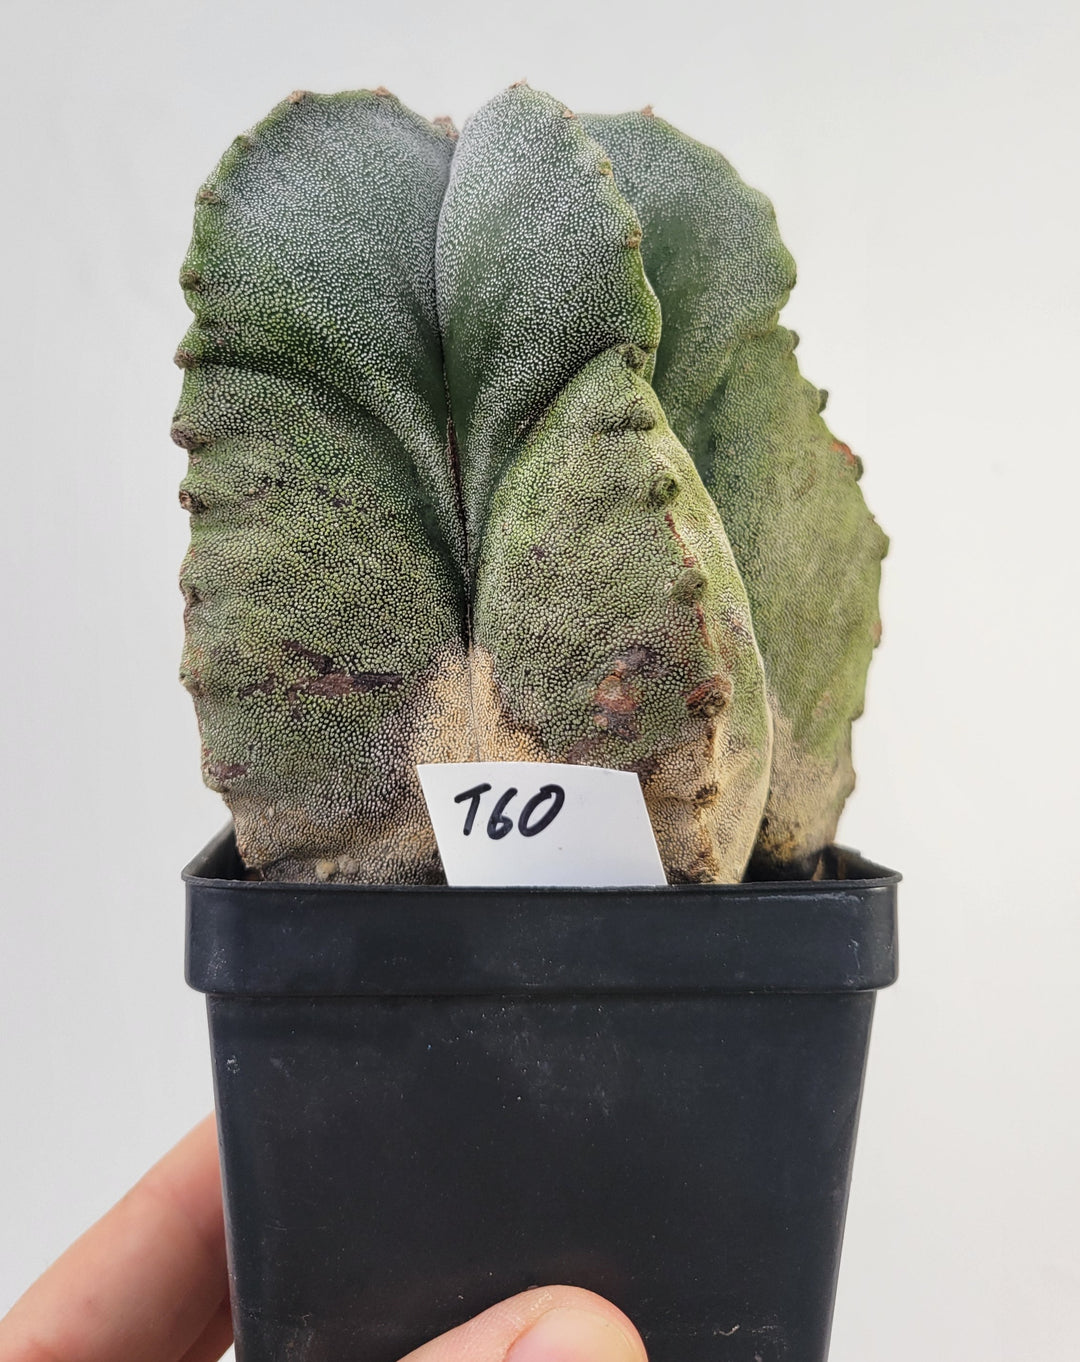 Astrophytum Myriostigma . 4" pot, very established, Specimen size XXL  #T60 - Nice Plants Good Pots